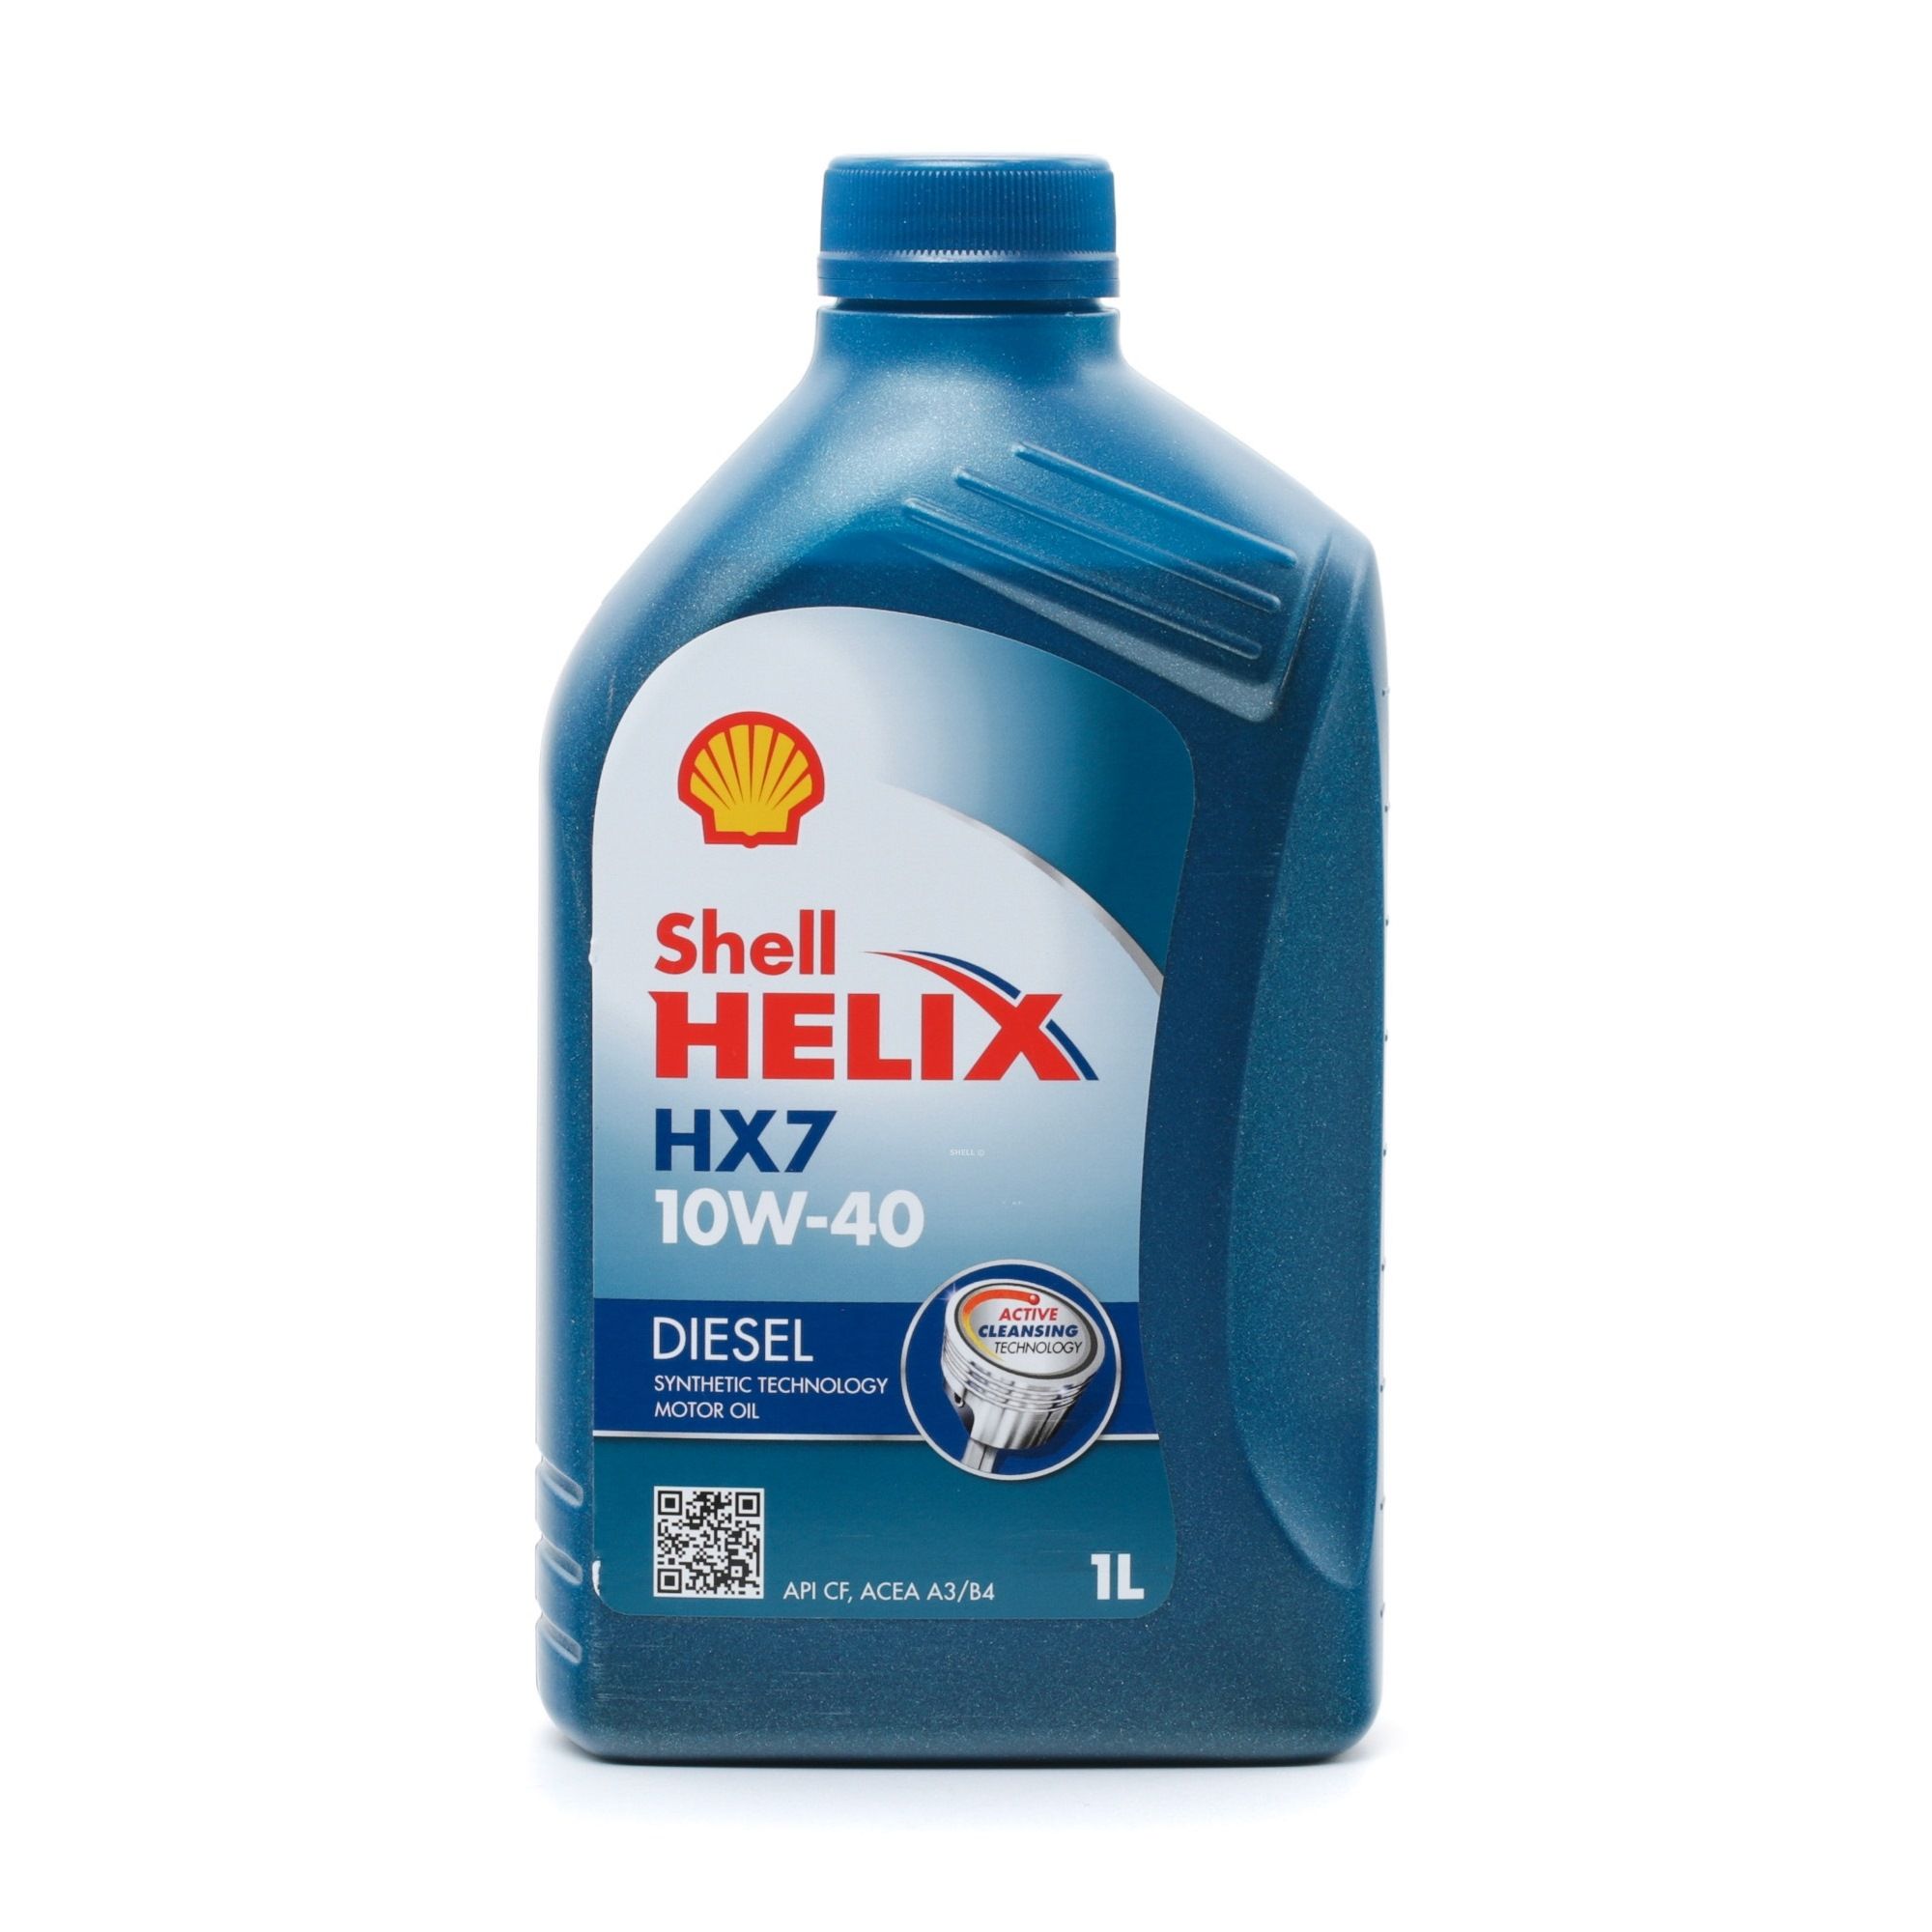 550040427 SHELL Helix, HX7 DIESEL 10W-40, 1l, Teilsynthetiköl Motoröl 550040427 günstig kaufen